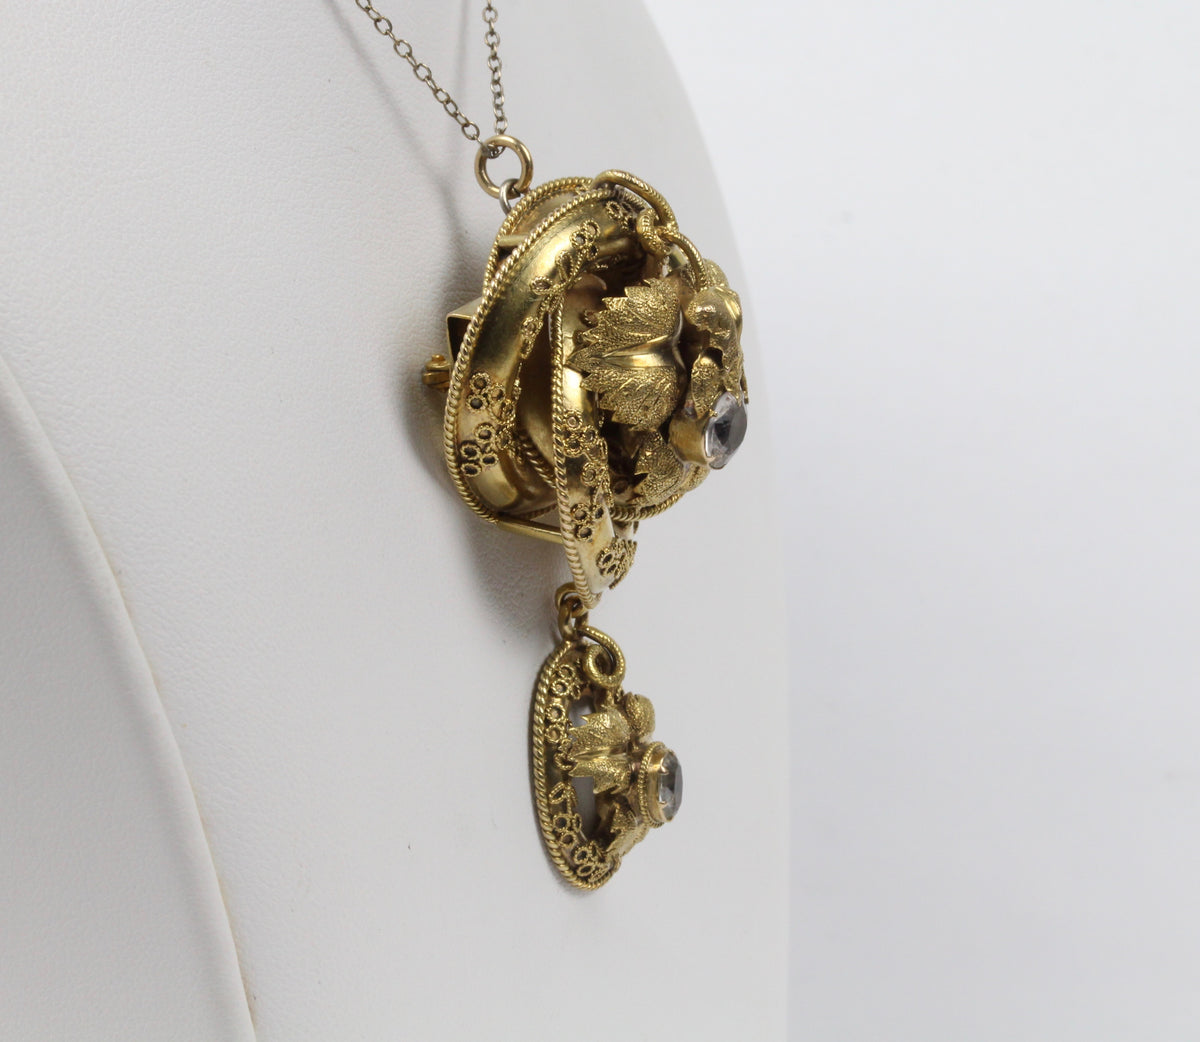 Victorian Etruscan Revival 14K Gold and Quartz Love Knot Brooch Pendant